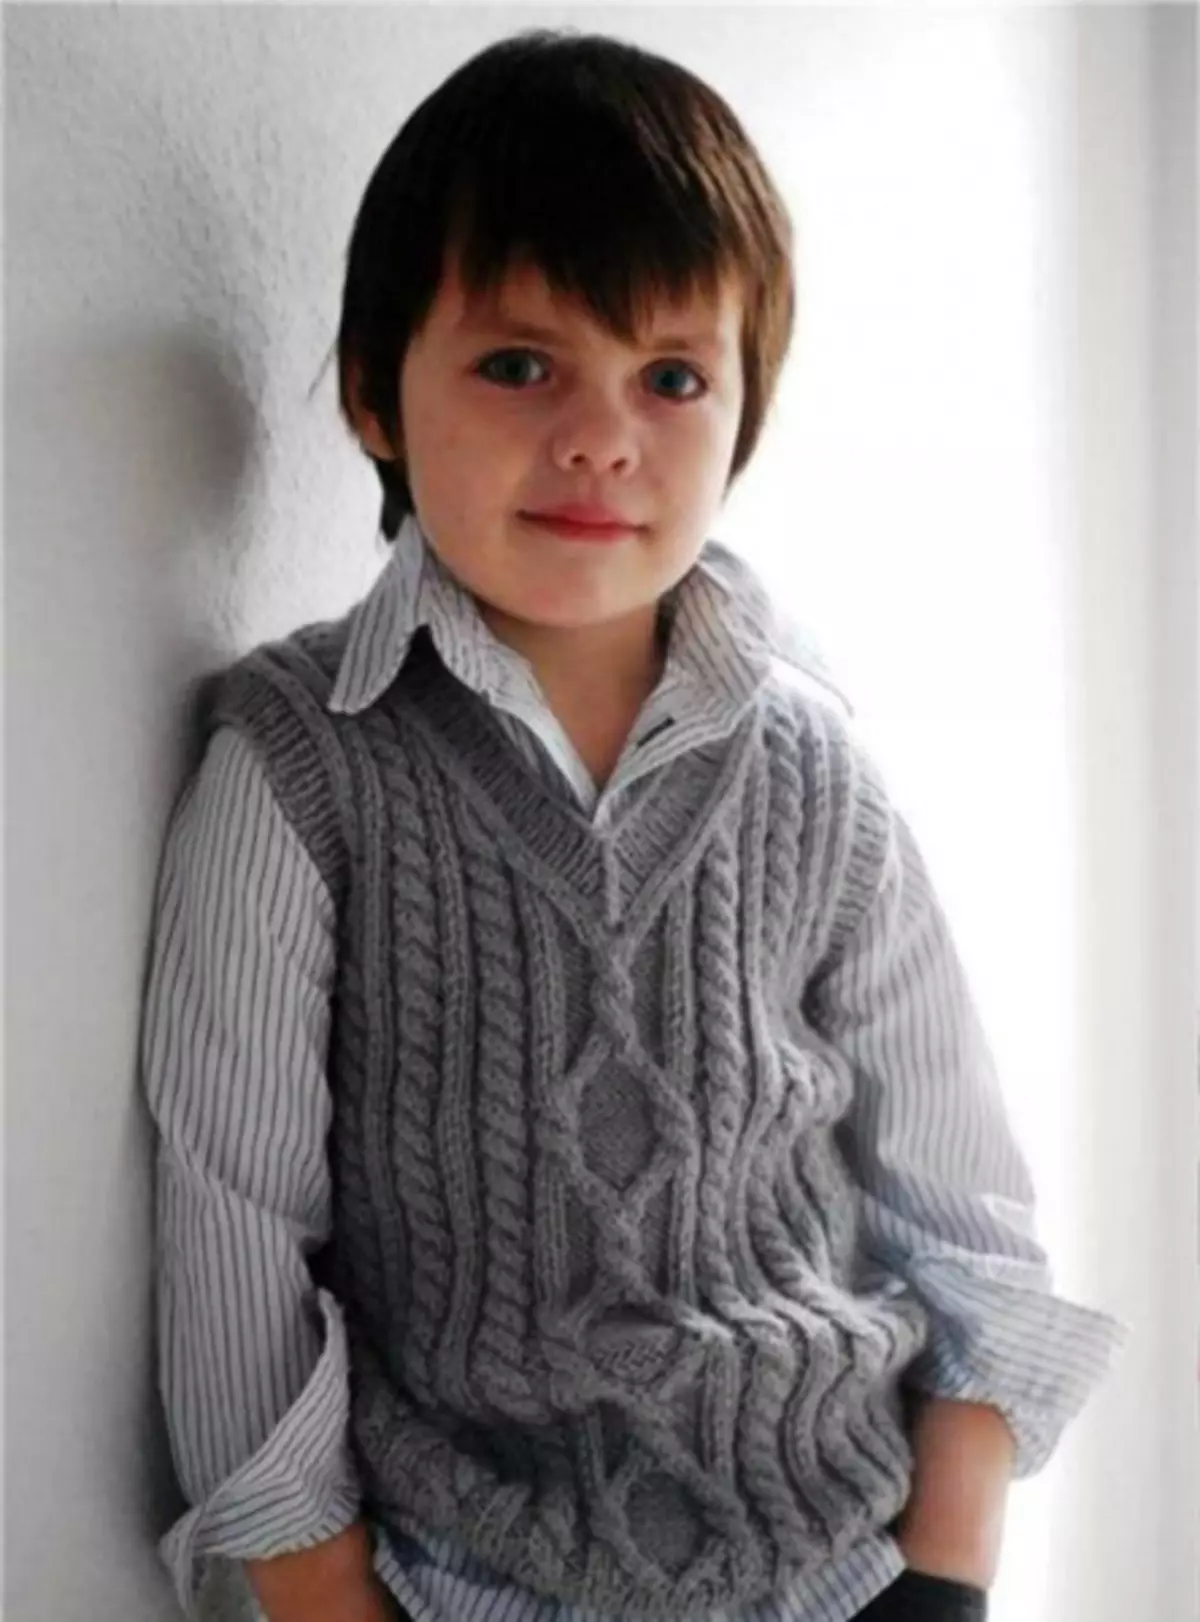 Новчини без рукава за игле за плетење: Како везати јиг за децу до годину дана, 1 годину и 7 година са фотографијама